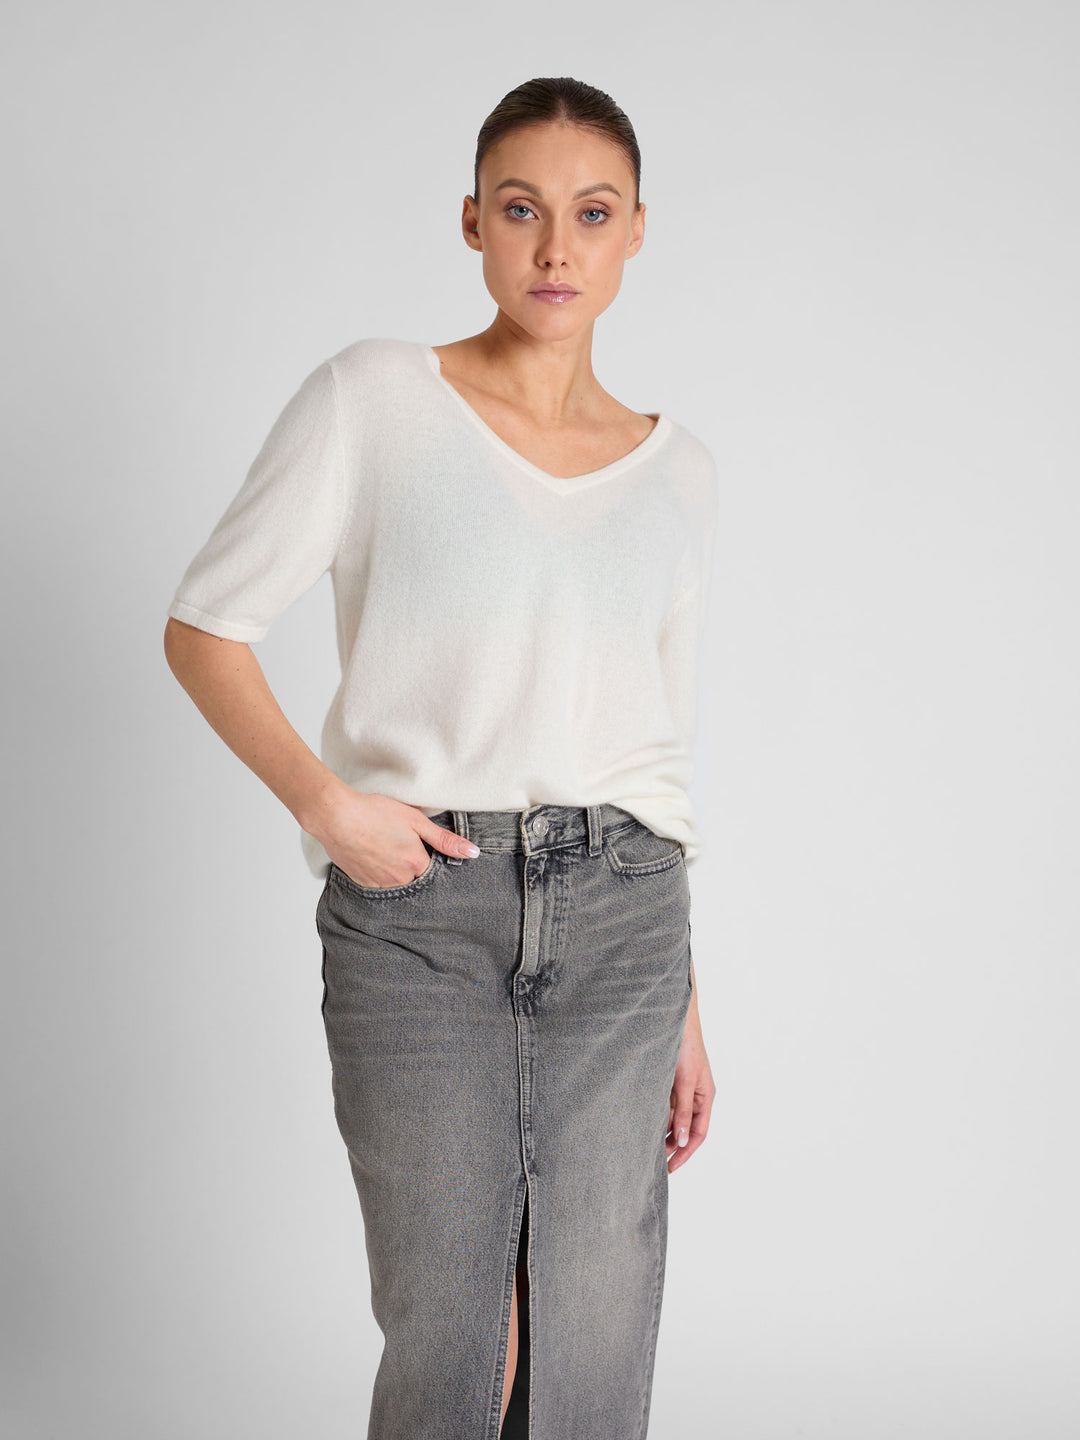 Cashmere T-shirt "Iben" in 100% pure cashmere. Scandinavian design by Kashmina. Color: White.